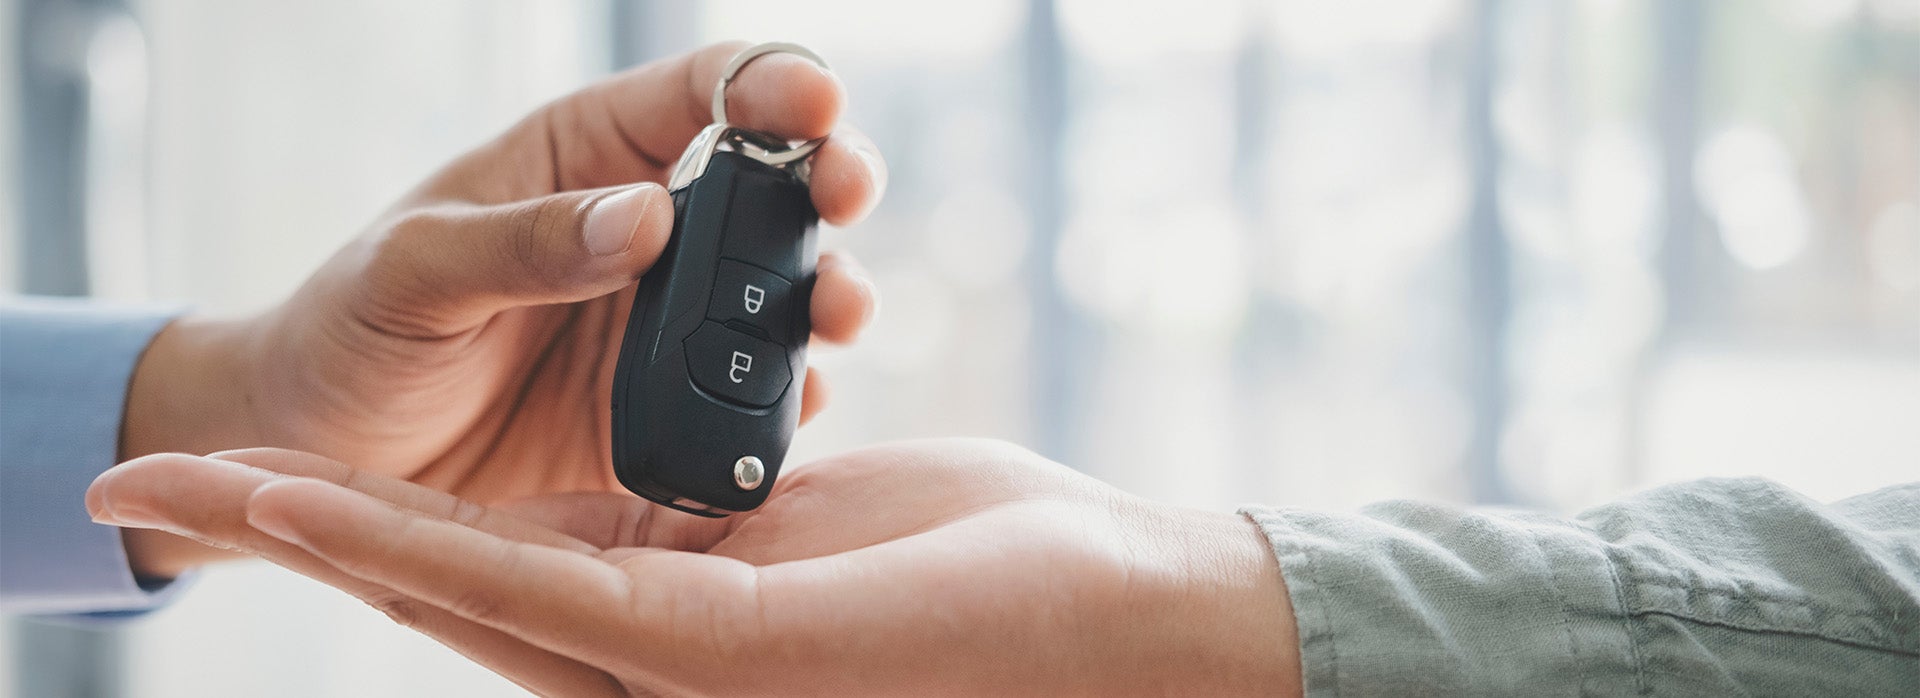 High Cost of Replacing a Car Key | Bennett Toyota in Allentown, PA | Car Sales Associate Handing Customer Car Keys